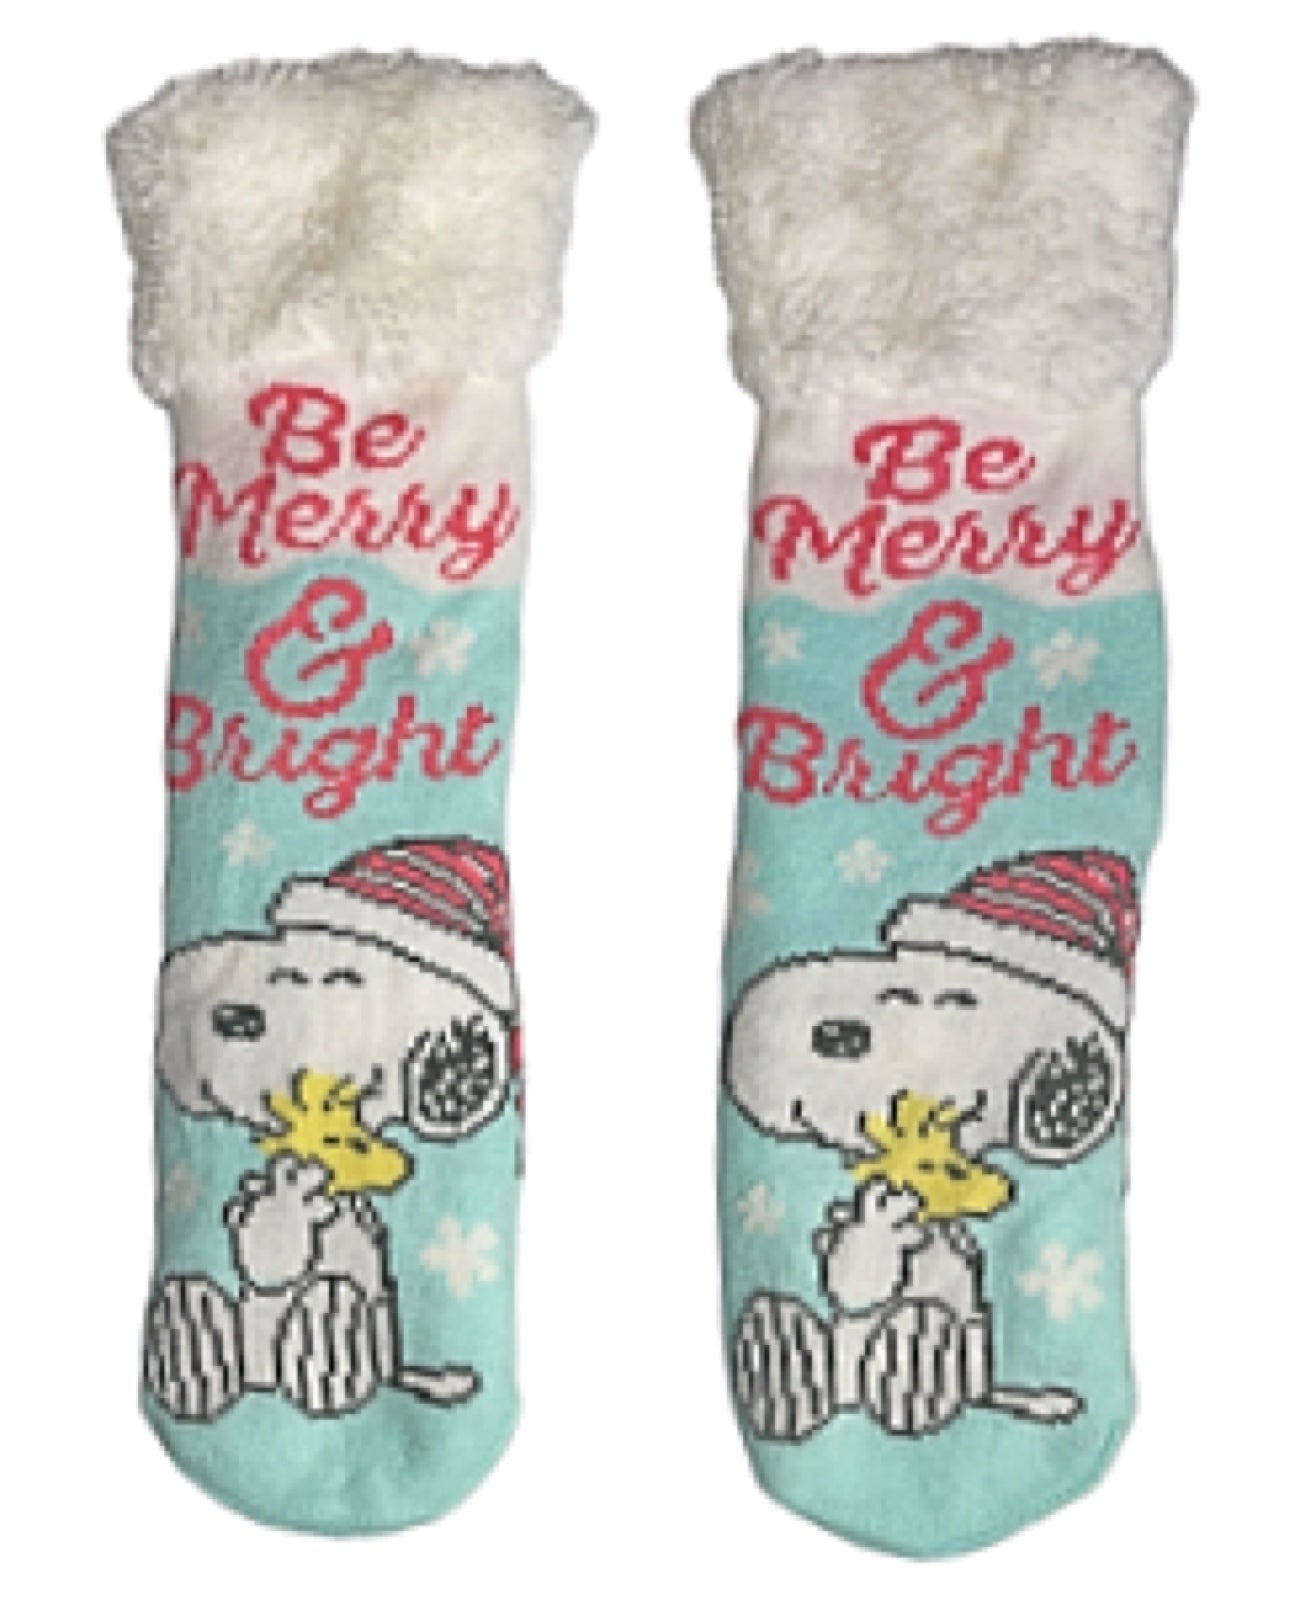 Snoopy Gripper Slipper Socks